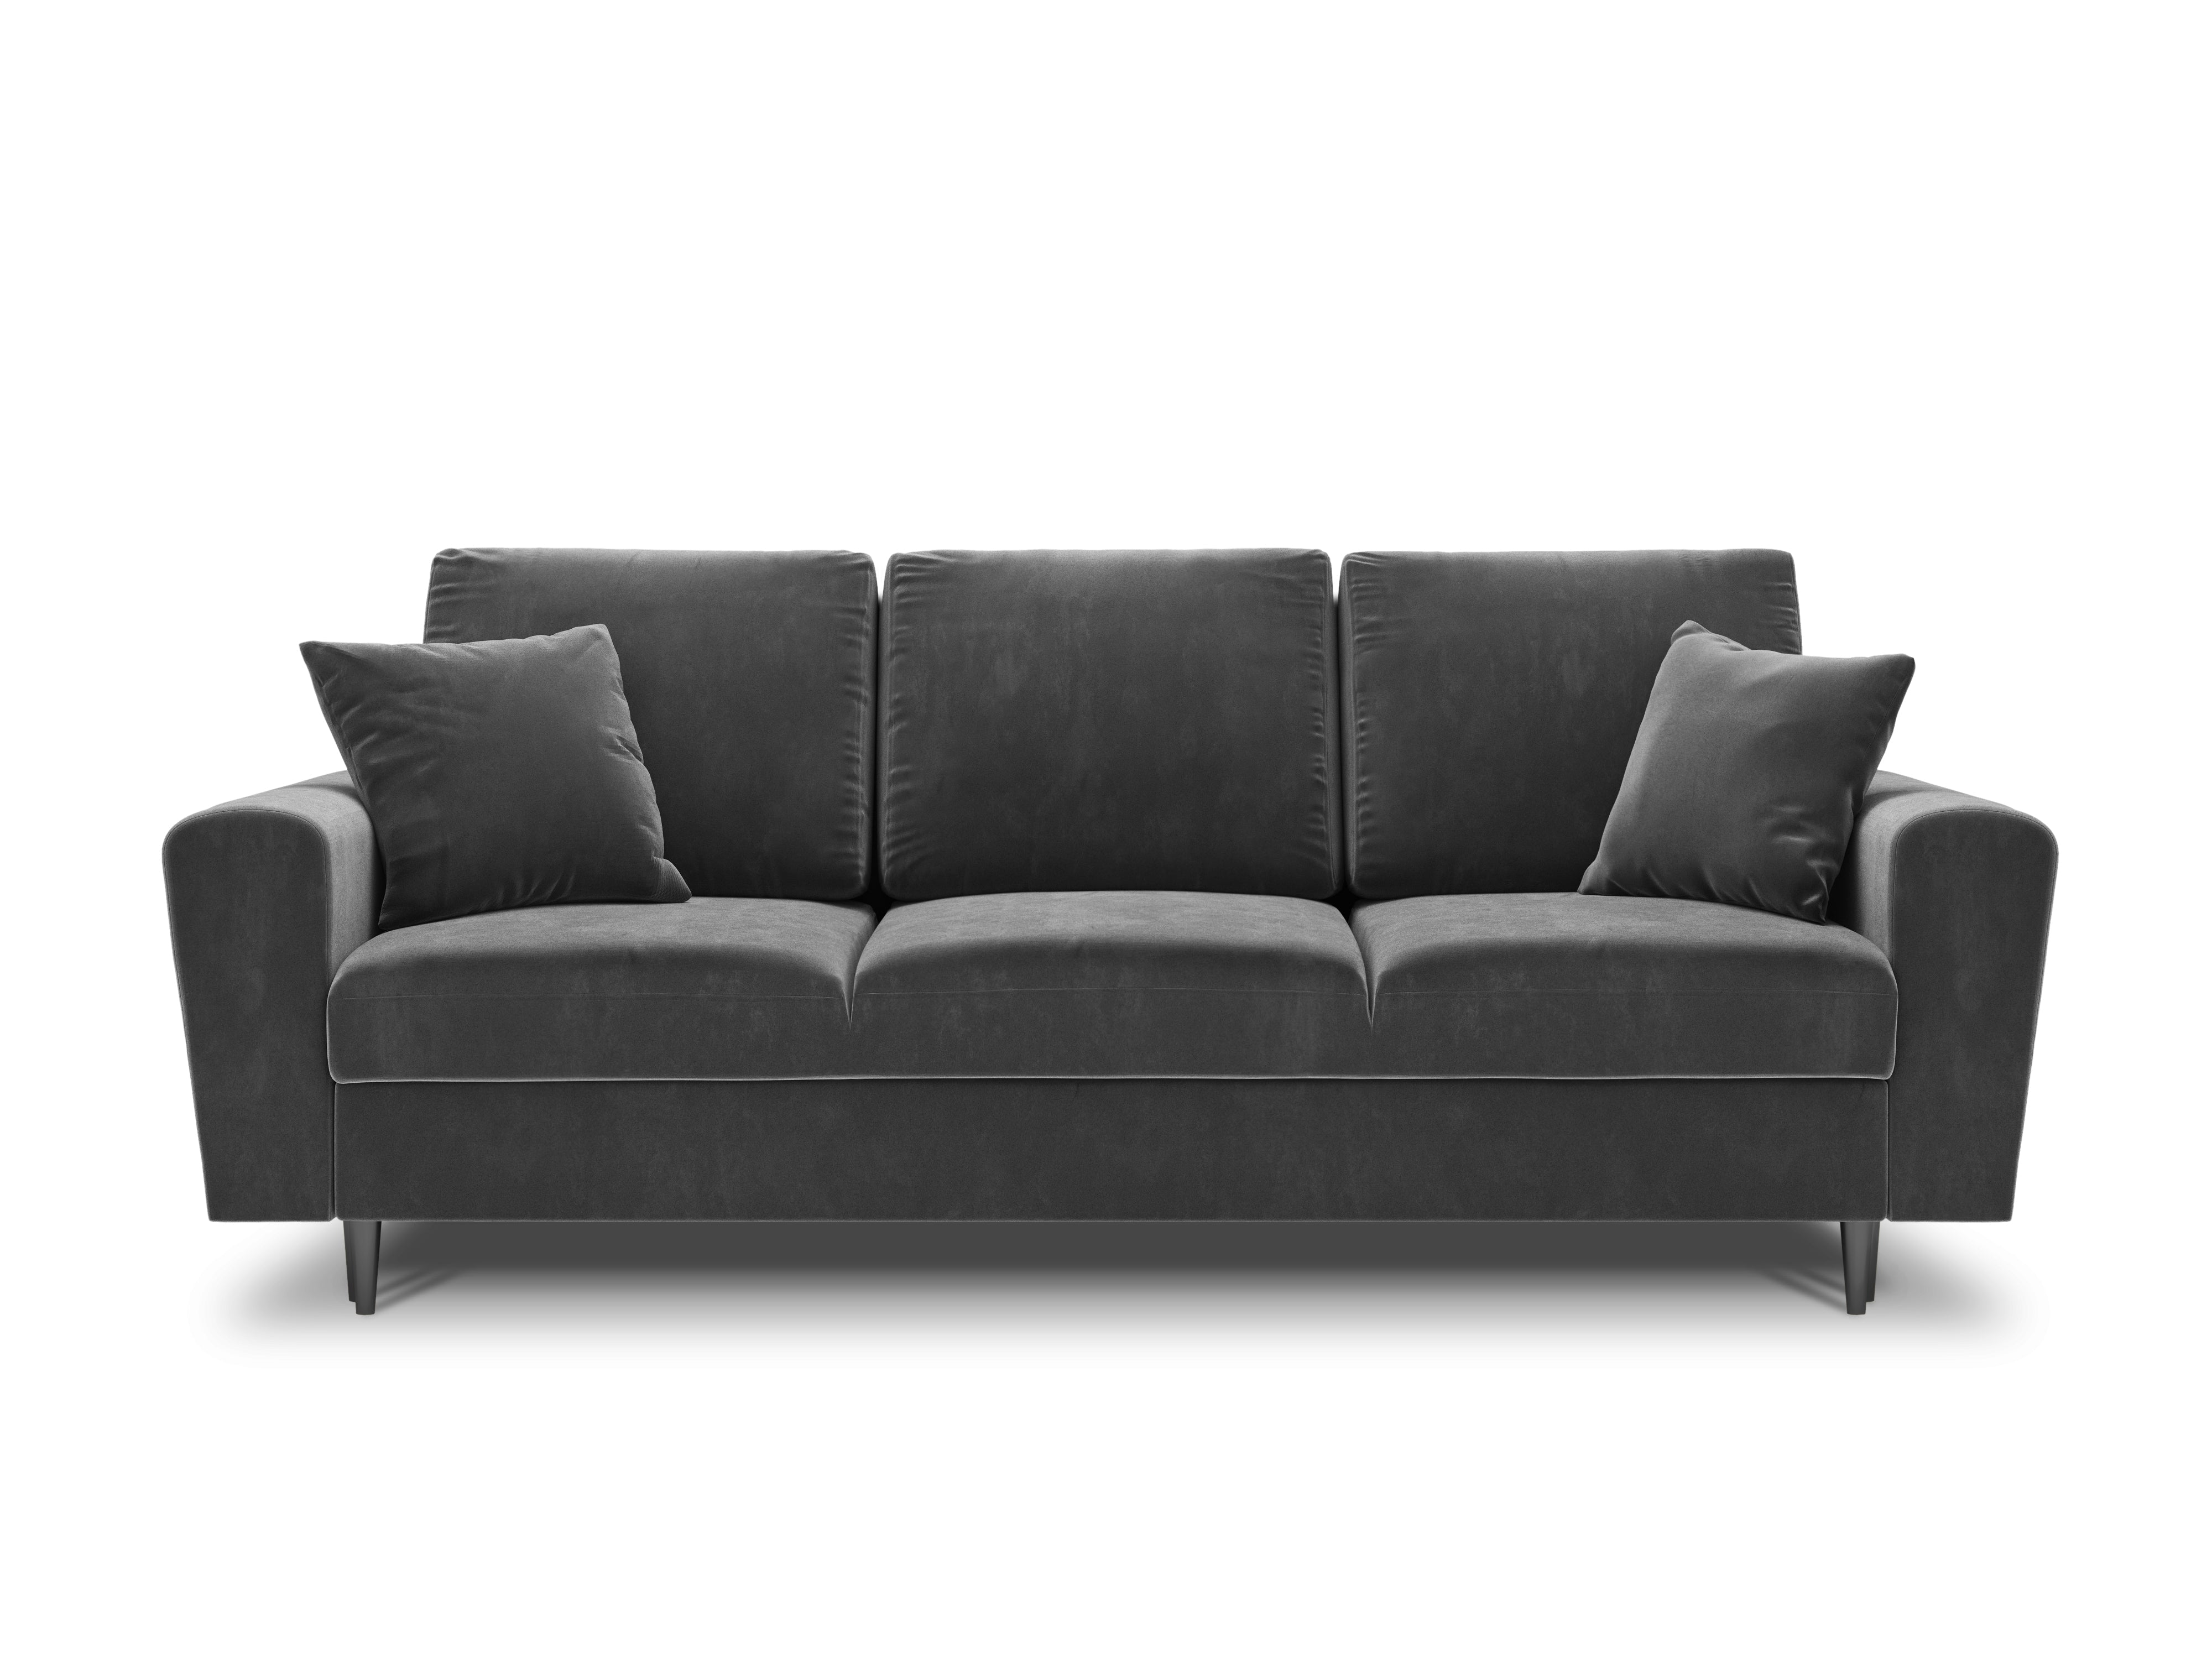 Sofa with glossy light gray